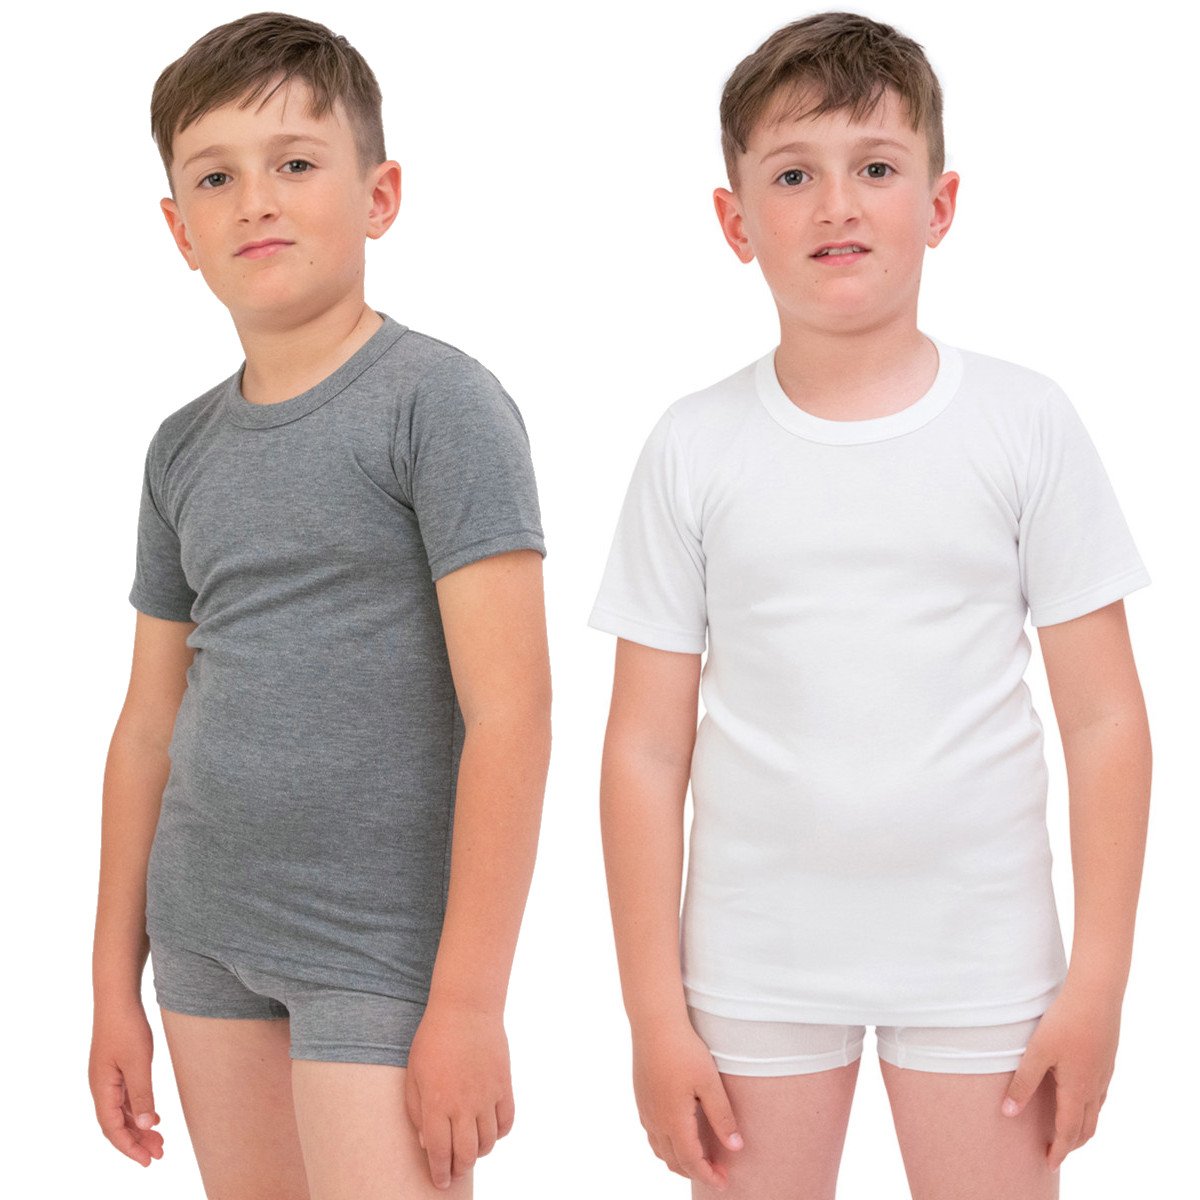 Celavi Boys Underwear Set Intimo Bambini e Ragazzi